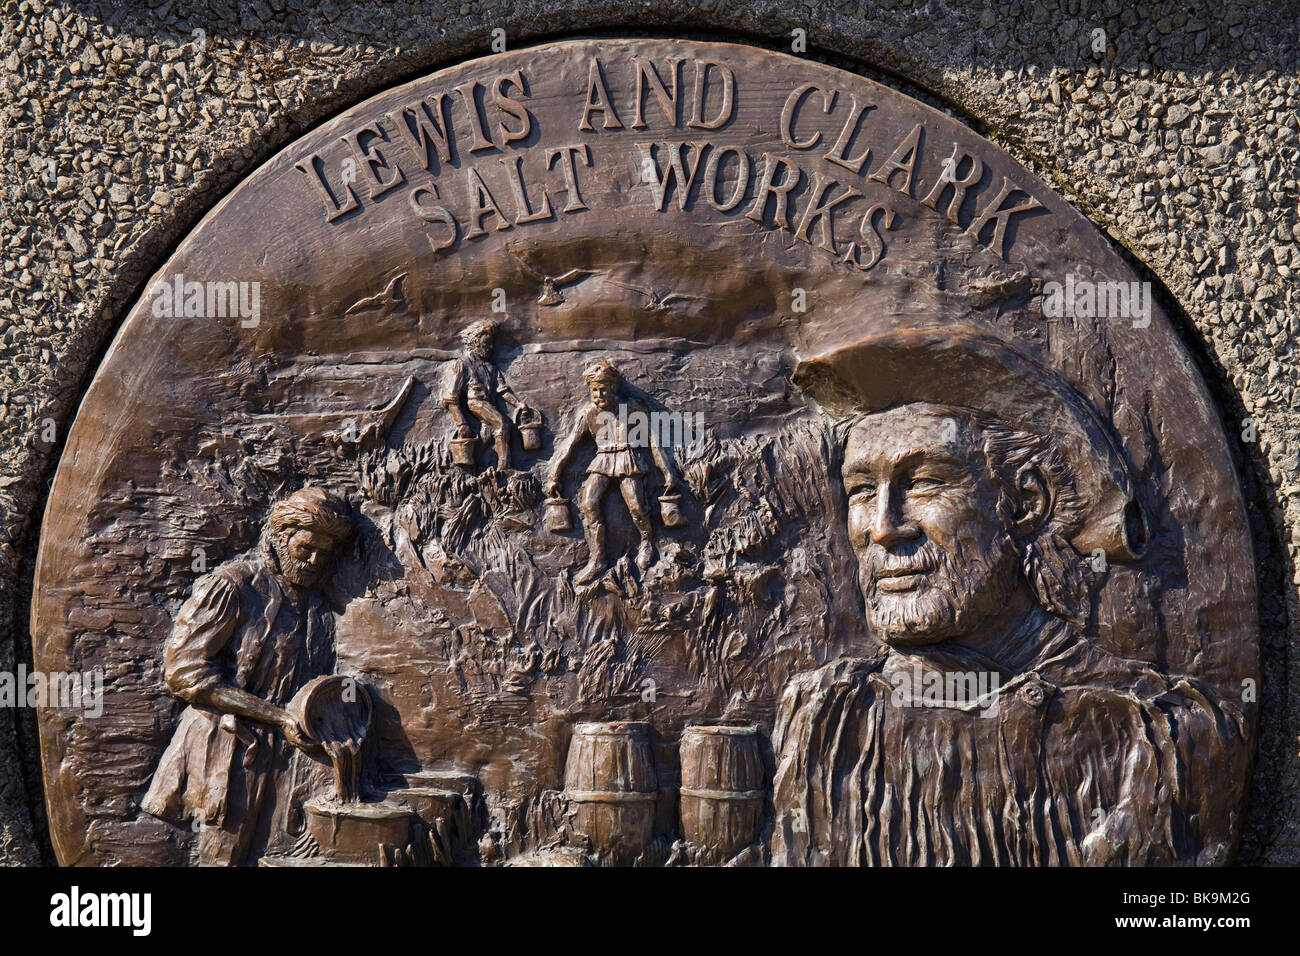 Close-up of Lewis & Clark Salt Works plaque, Seaside, Oregon, USA Stock Photo